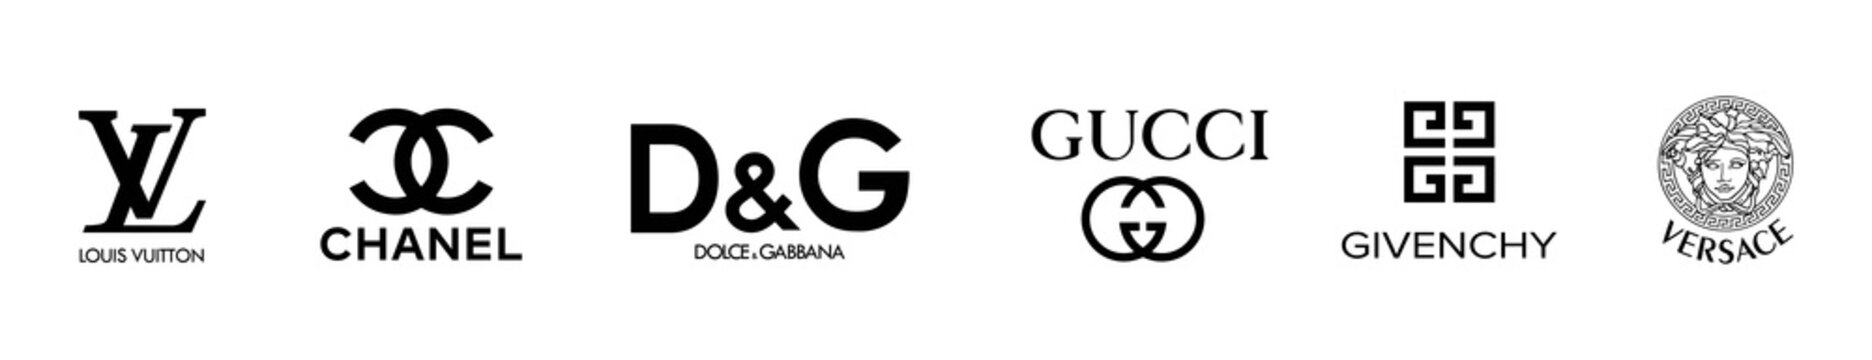 Collection vector logo popular clothing brands of GUCCI, Dolce Gabbana, Givenchy, Louis Vuitton, CHANEL, Versace. Zaporizhzhia, Ukraine - May 25, 2021